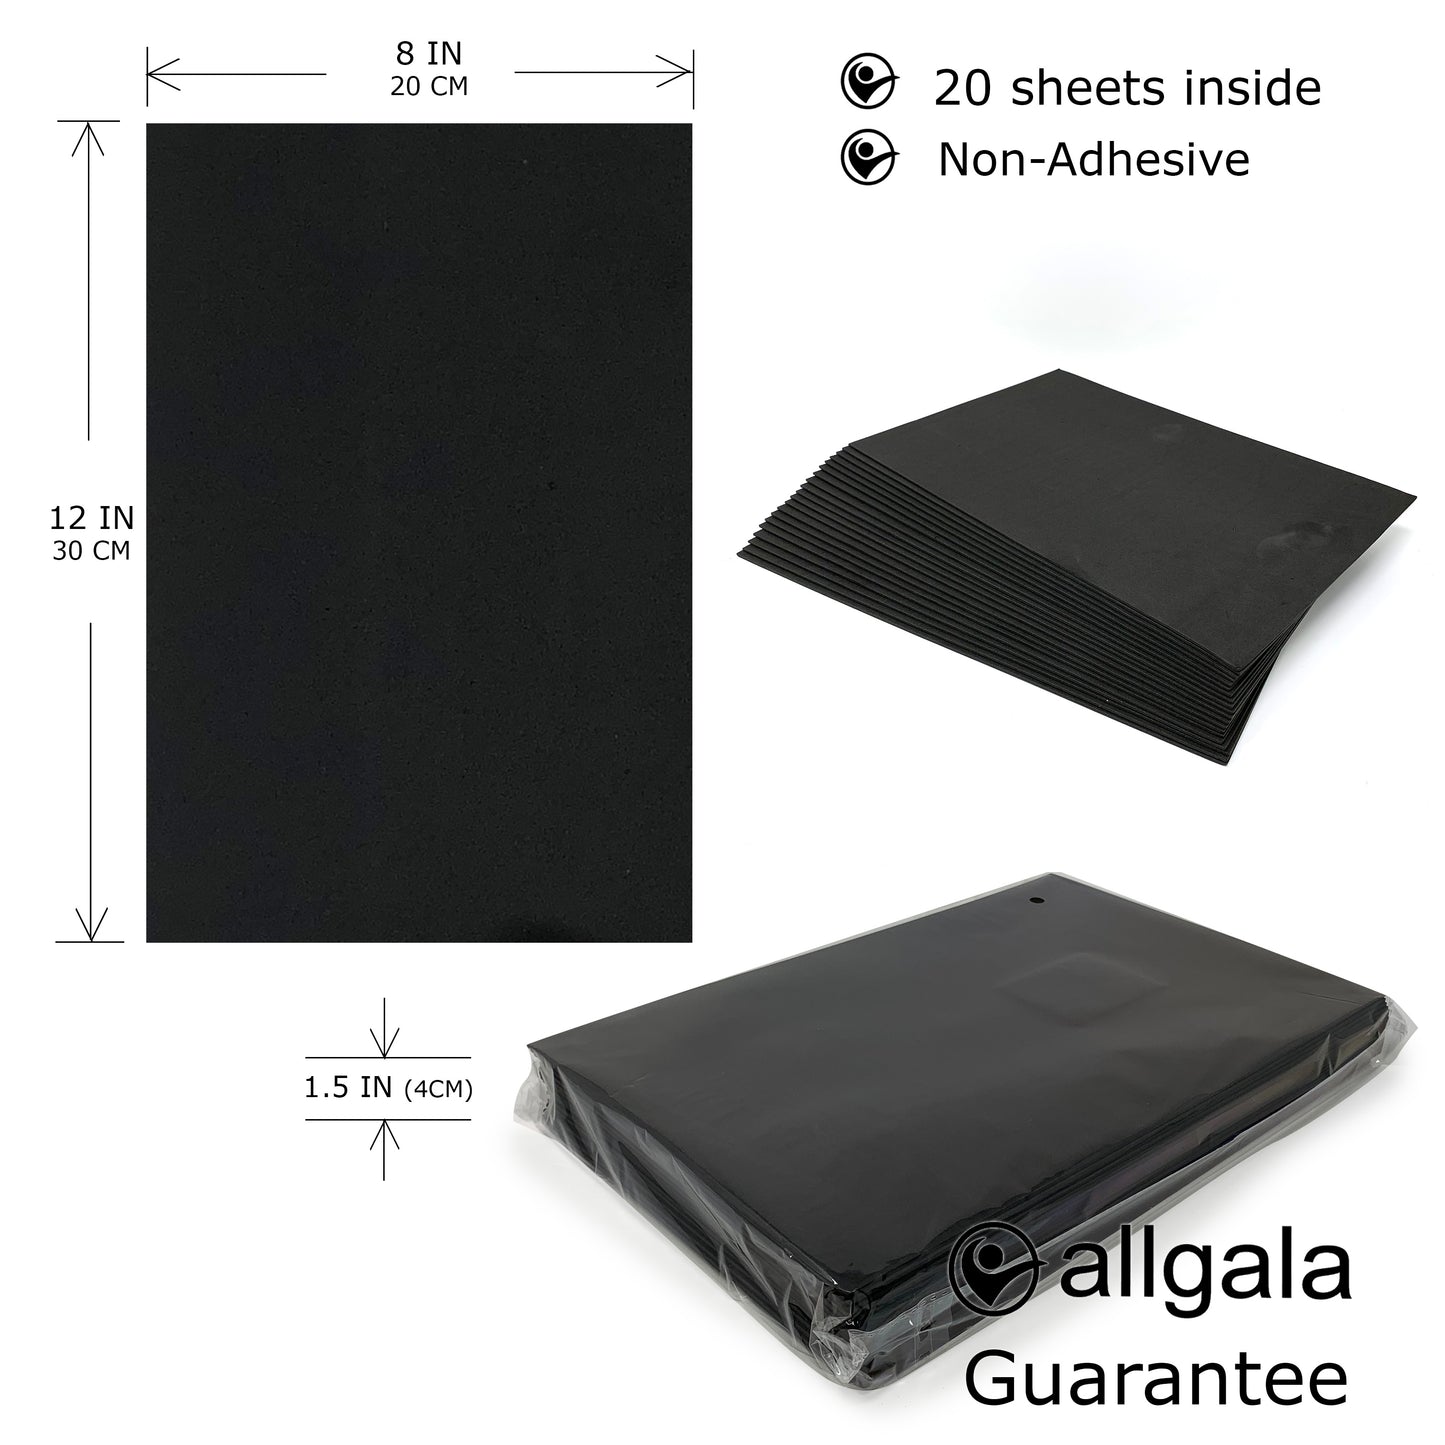 Allgala Foam Sheet 20 Pack EVA Foam Paper 8" x 12" Sheets